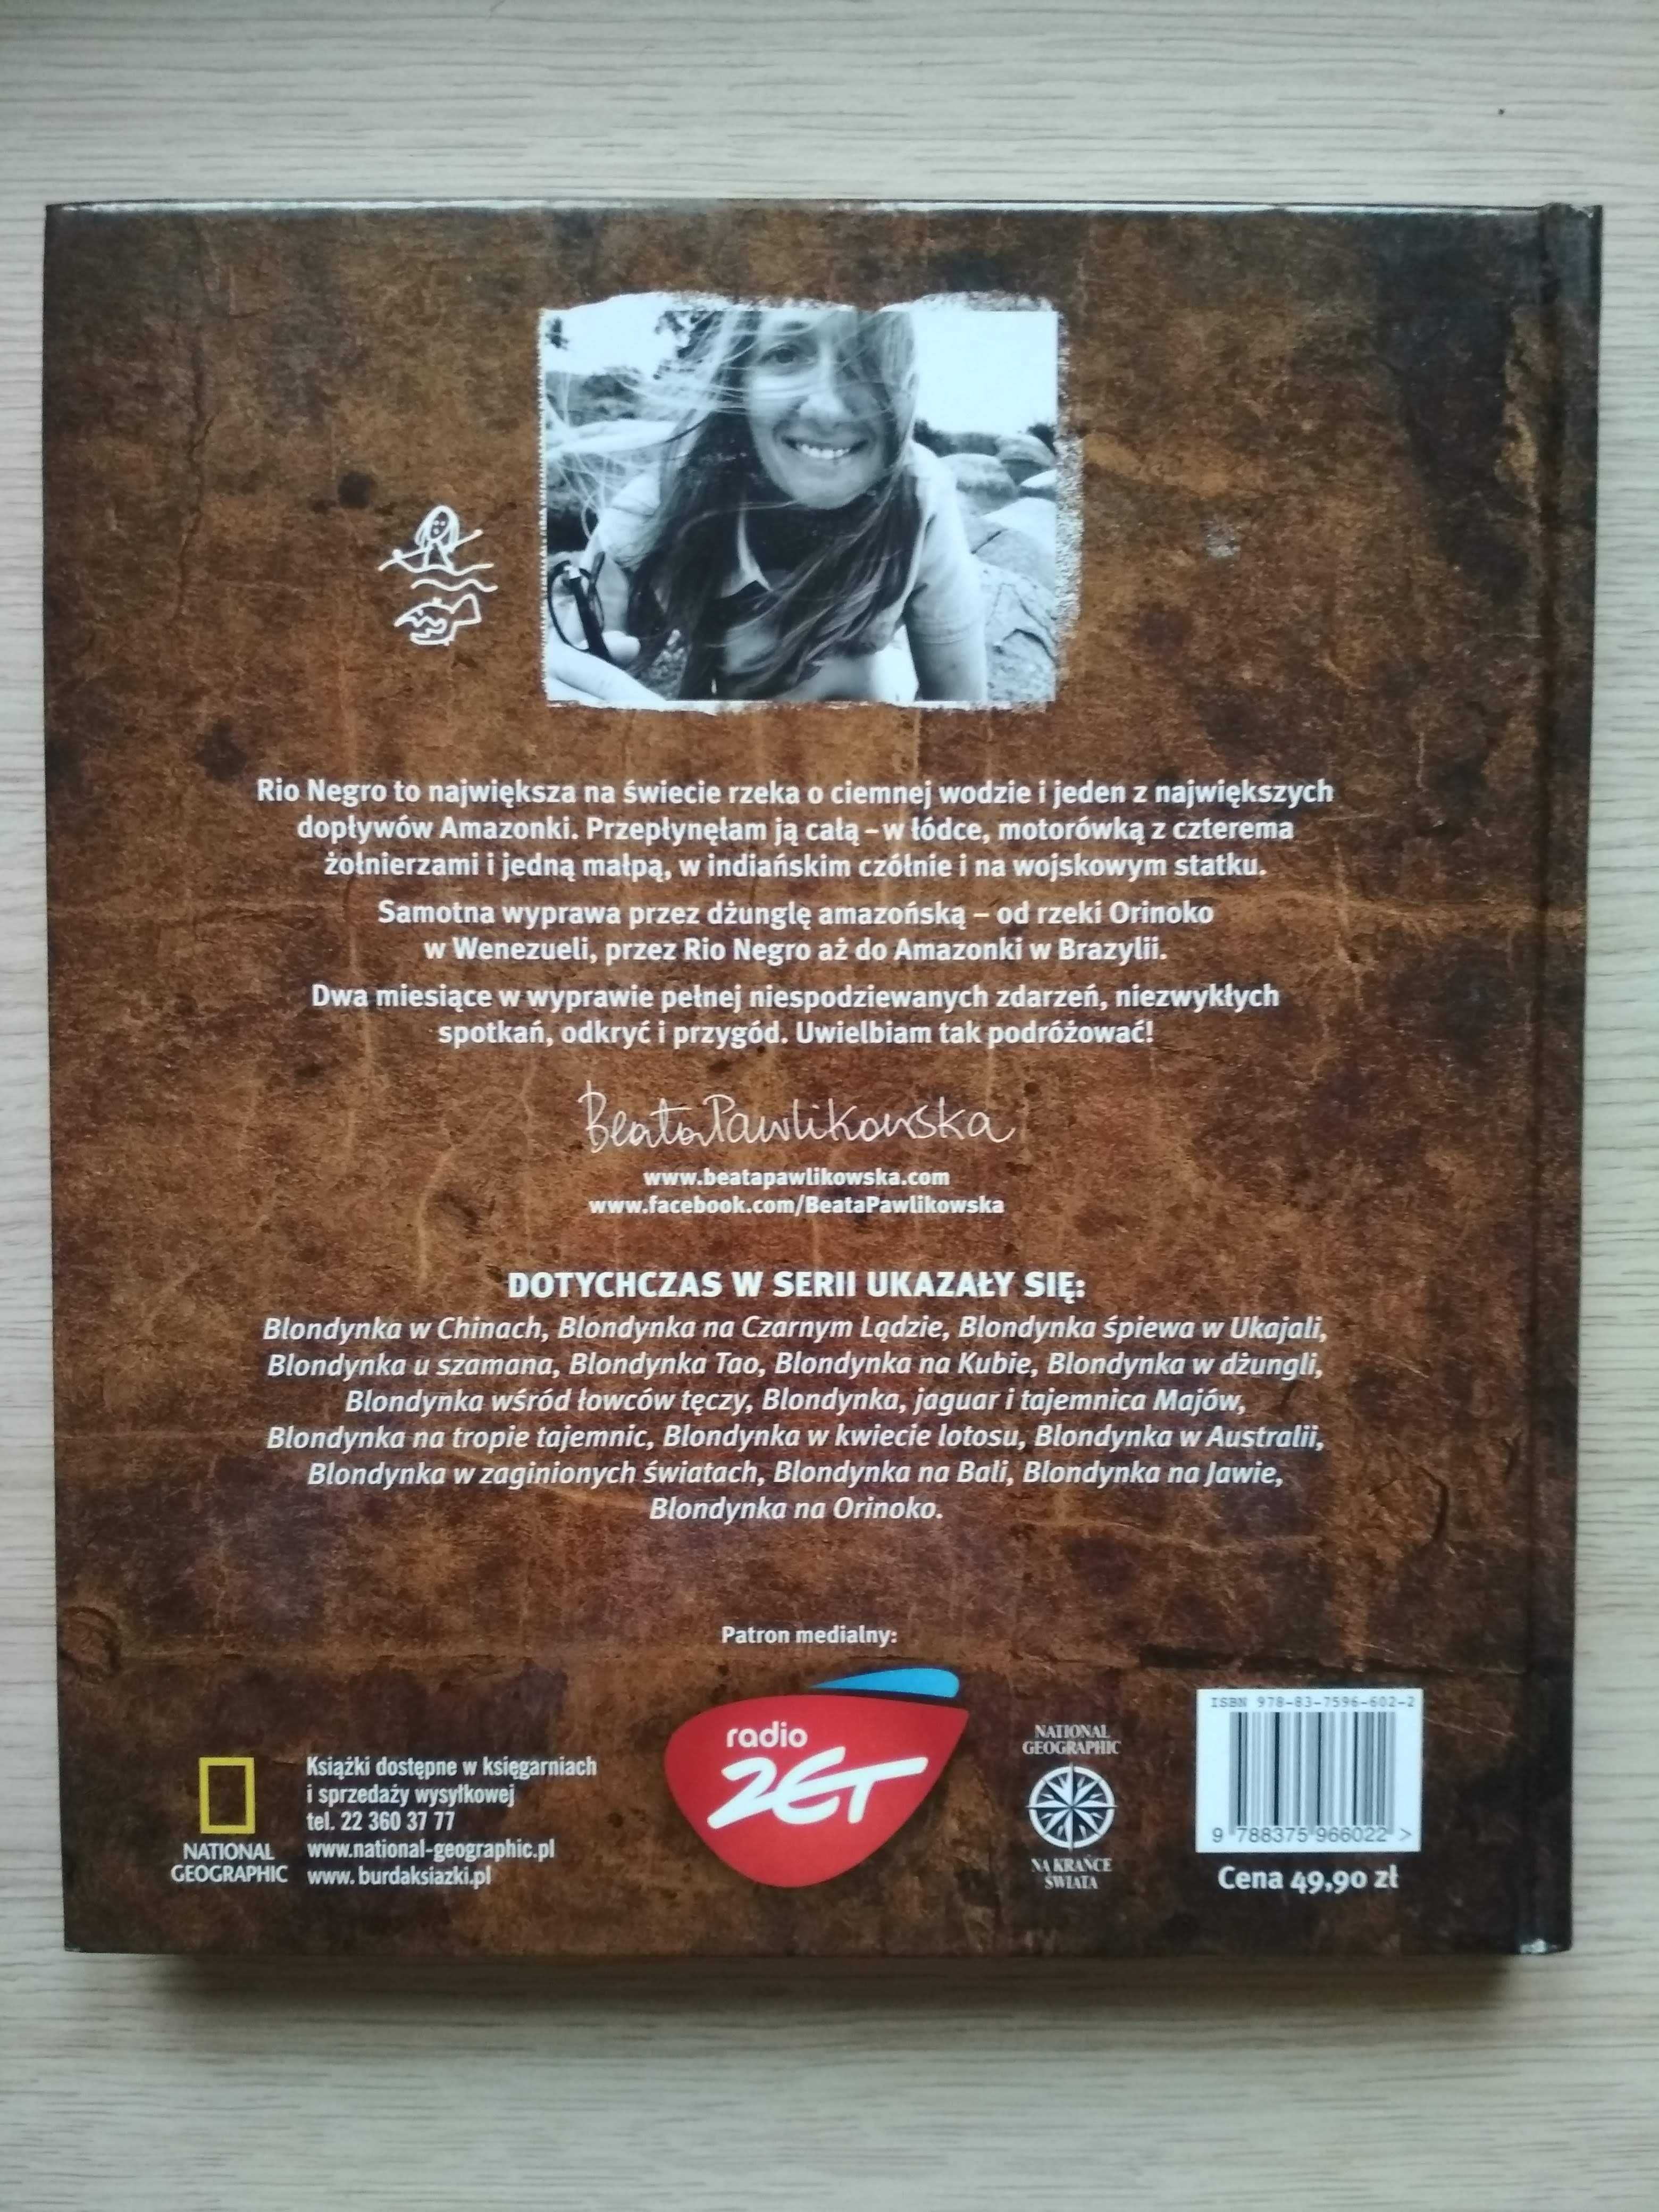 książka Beata Pawlikowska "Blondynka na Rio Negro"